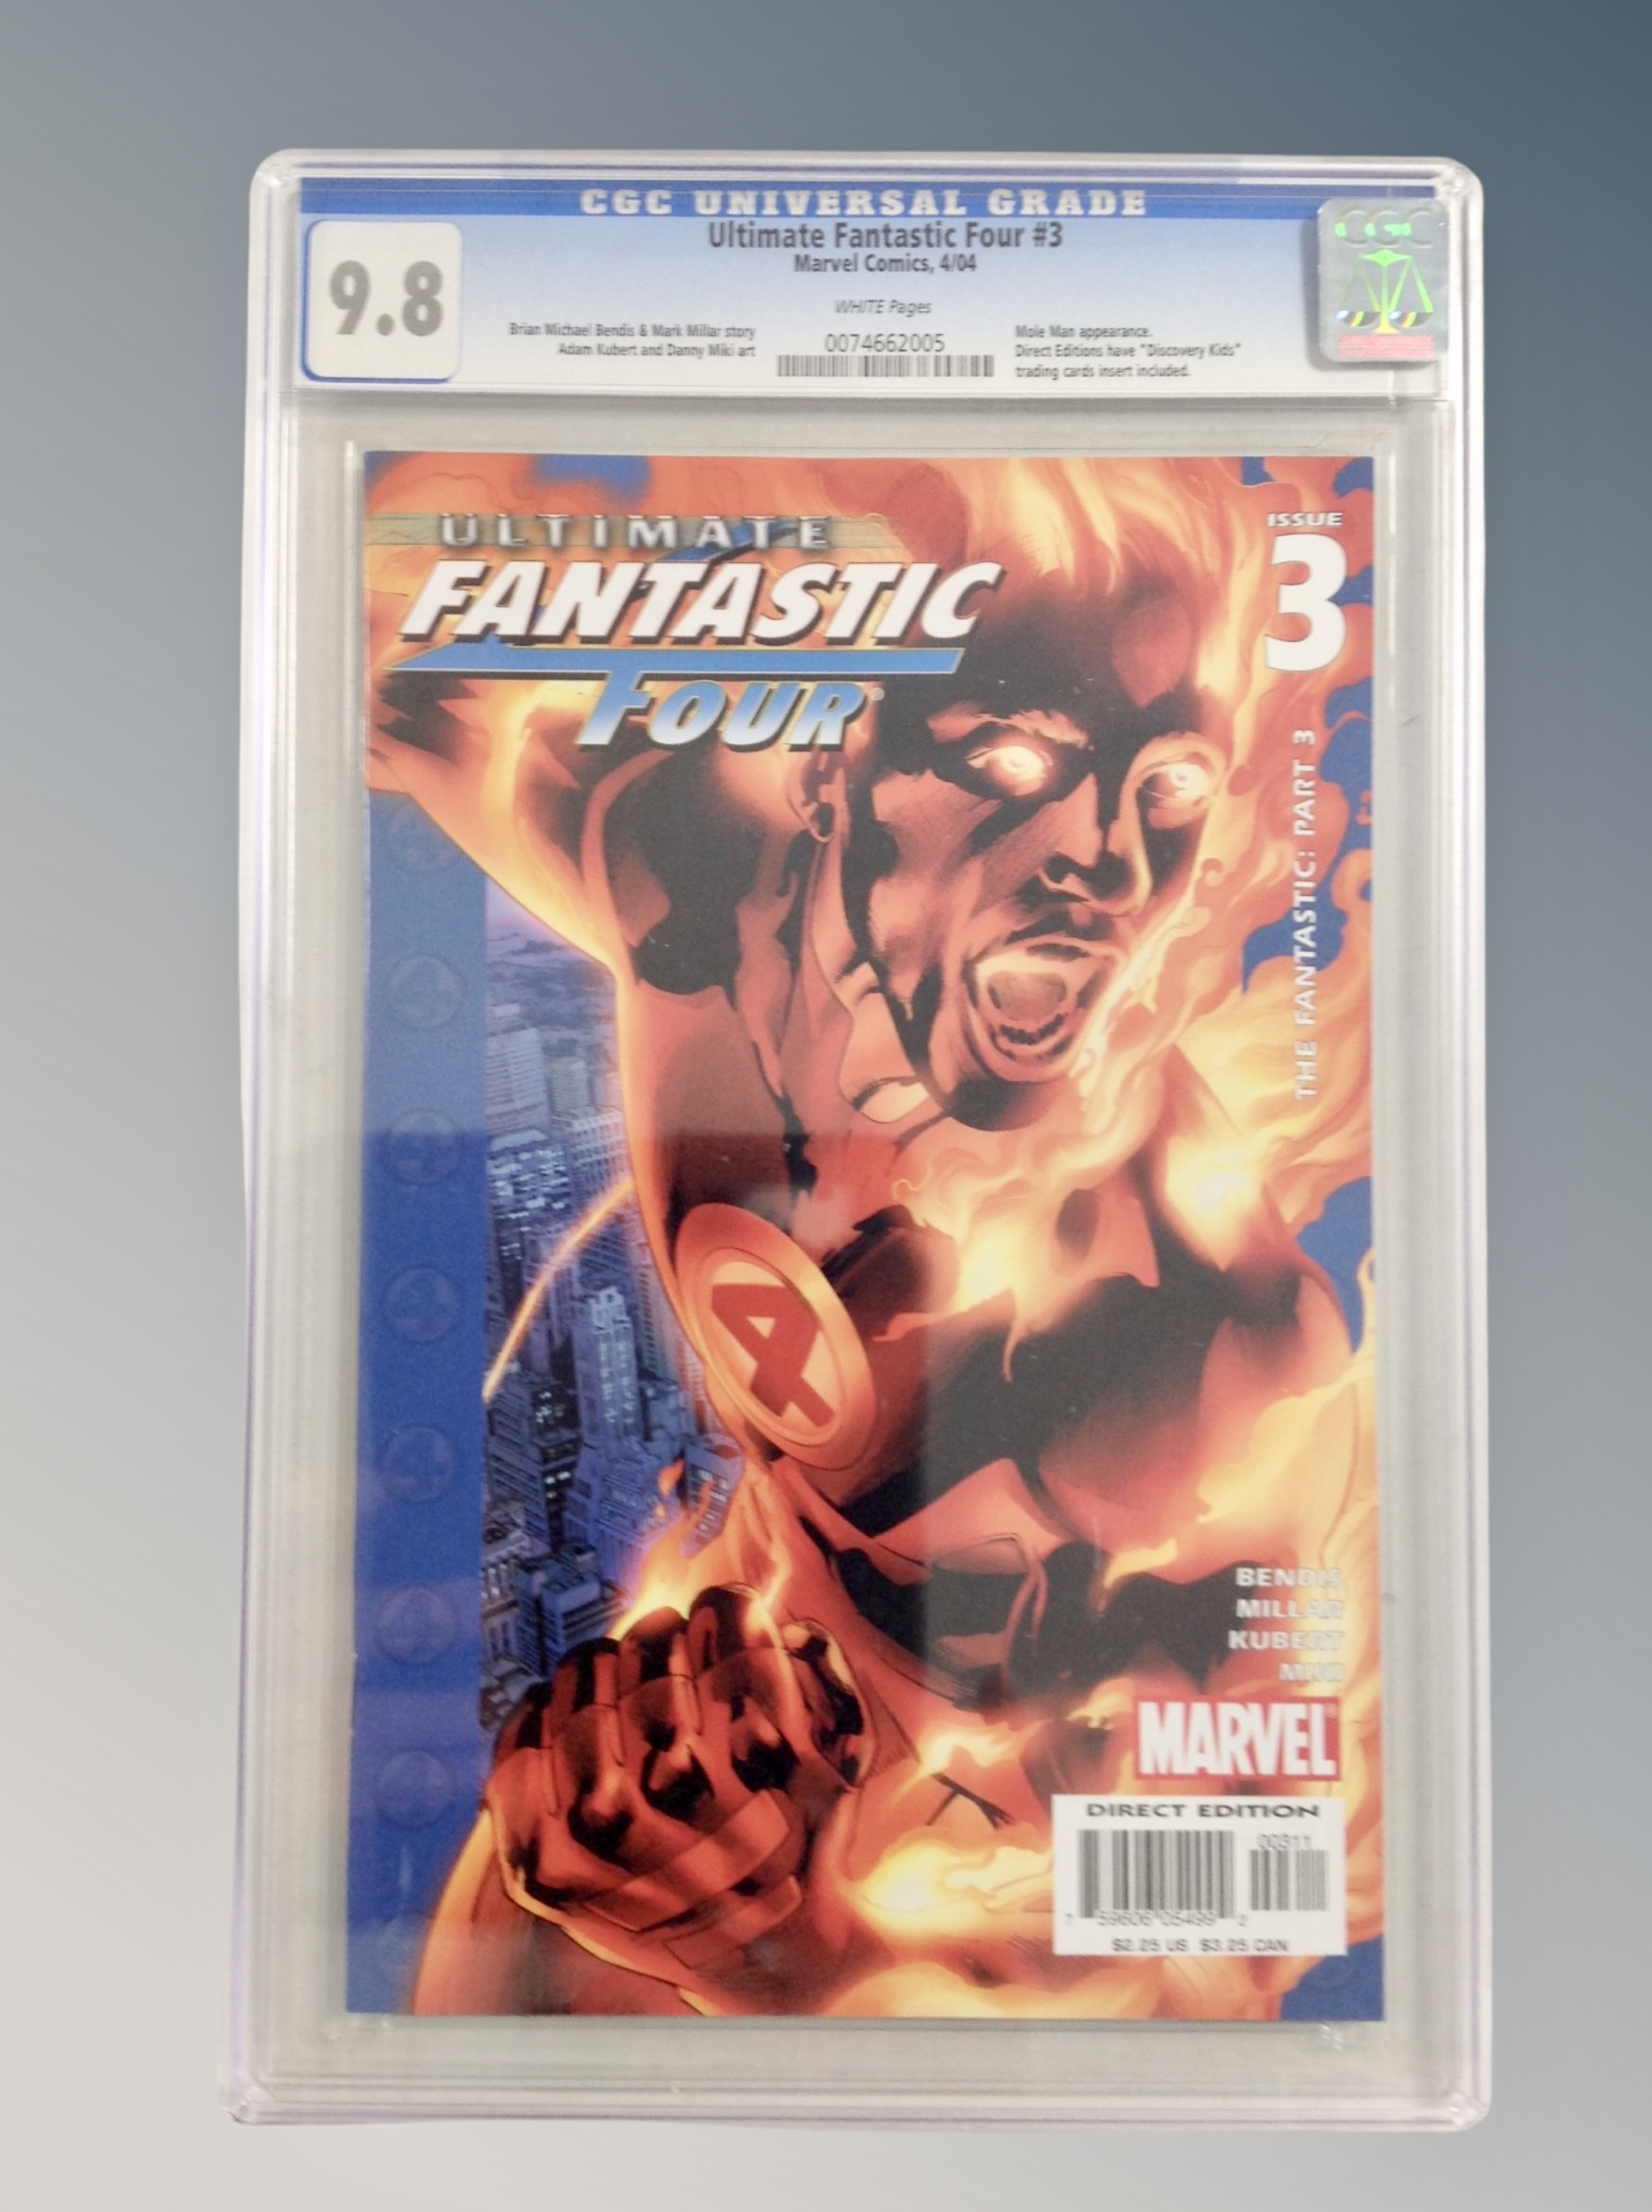 Marvel Comics : Ultimate Fantastic Four issue 3, CGC Universal Grade 9.8, slabbed.